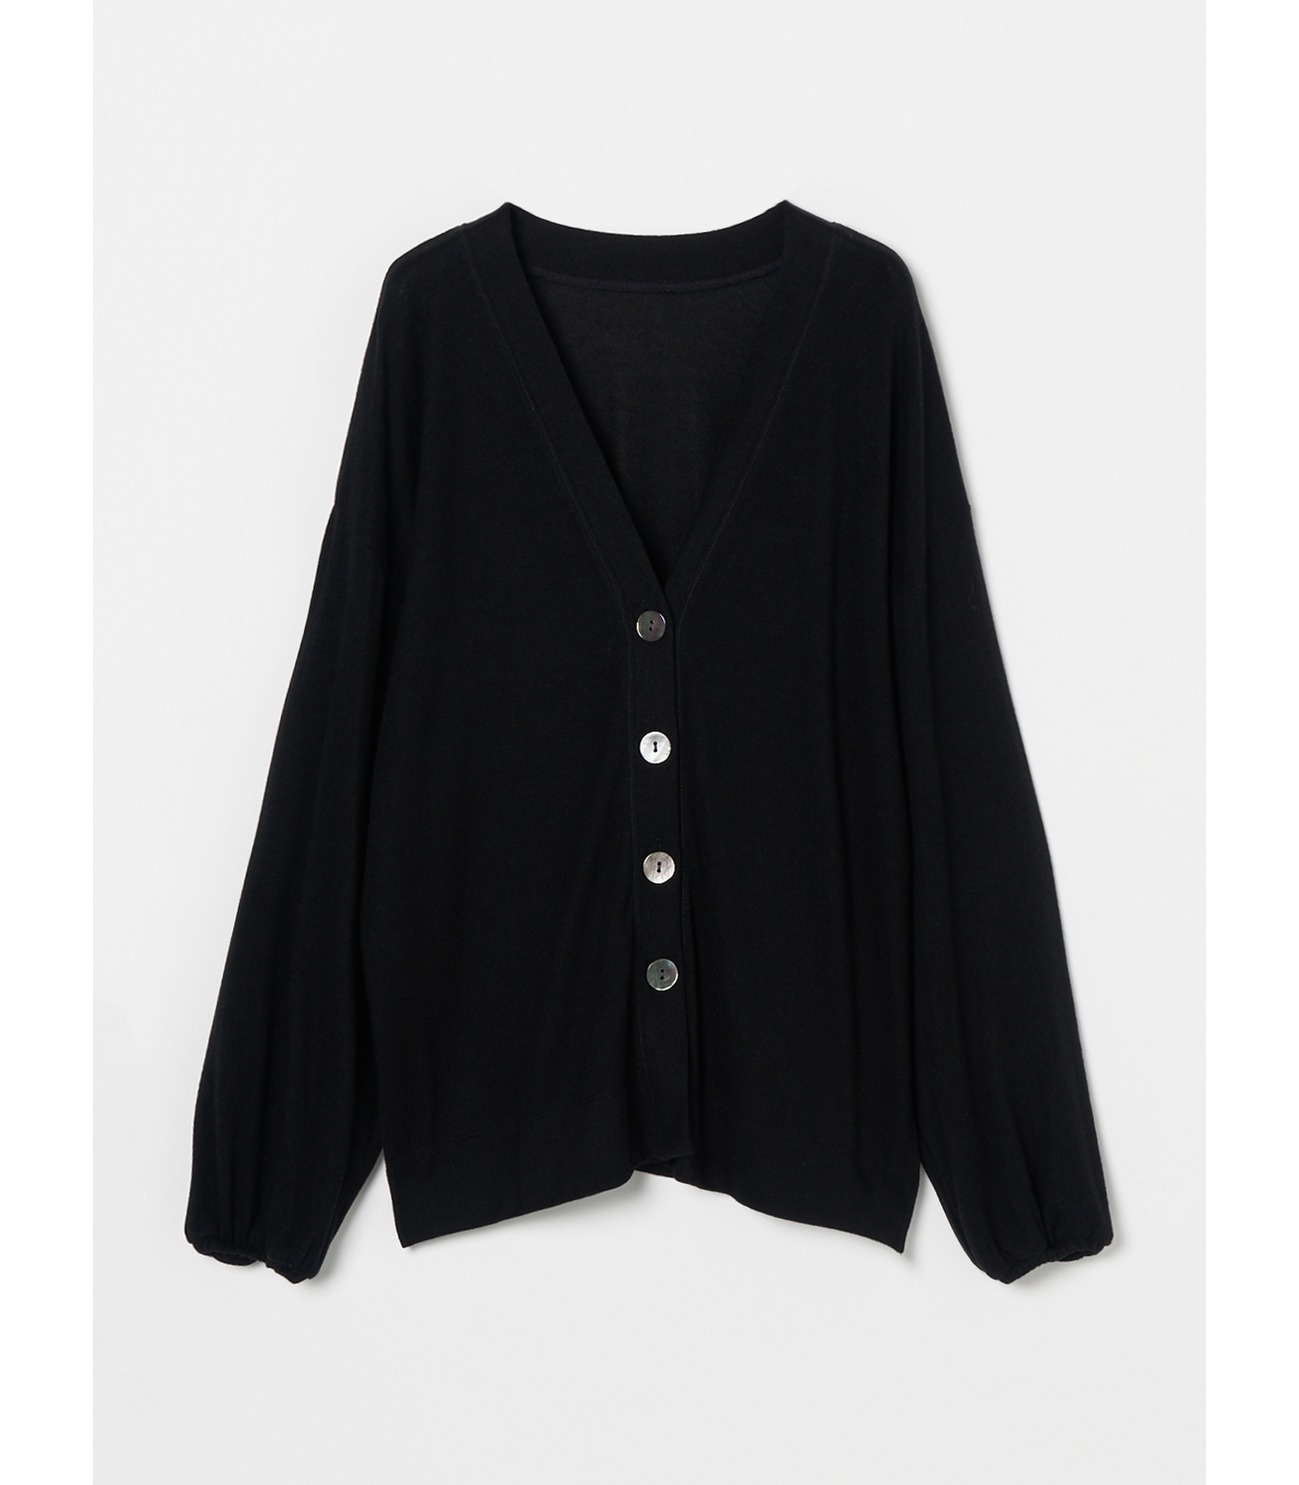 【Naoko Okusa x three dots】Brushed sweater volume sleeve 2way cardy 詳細画像 black 1